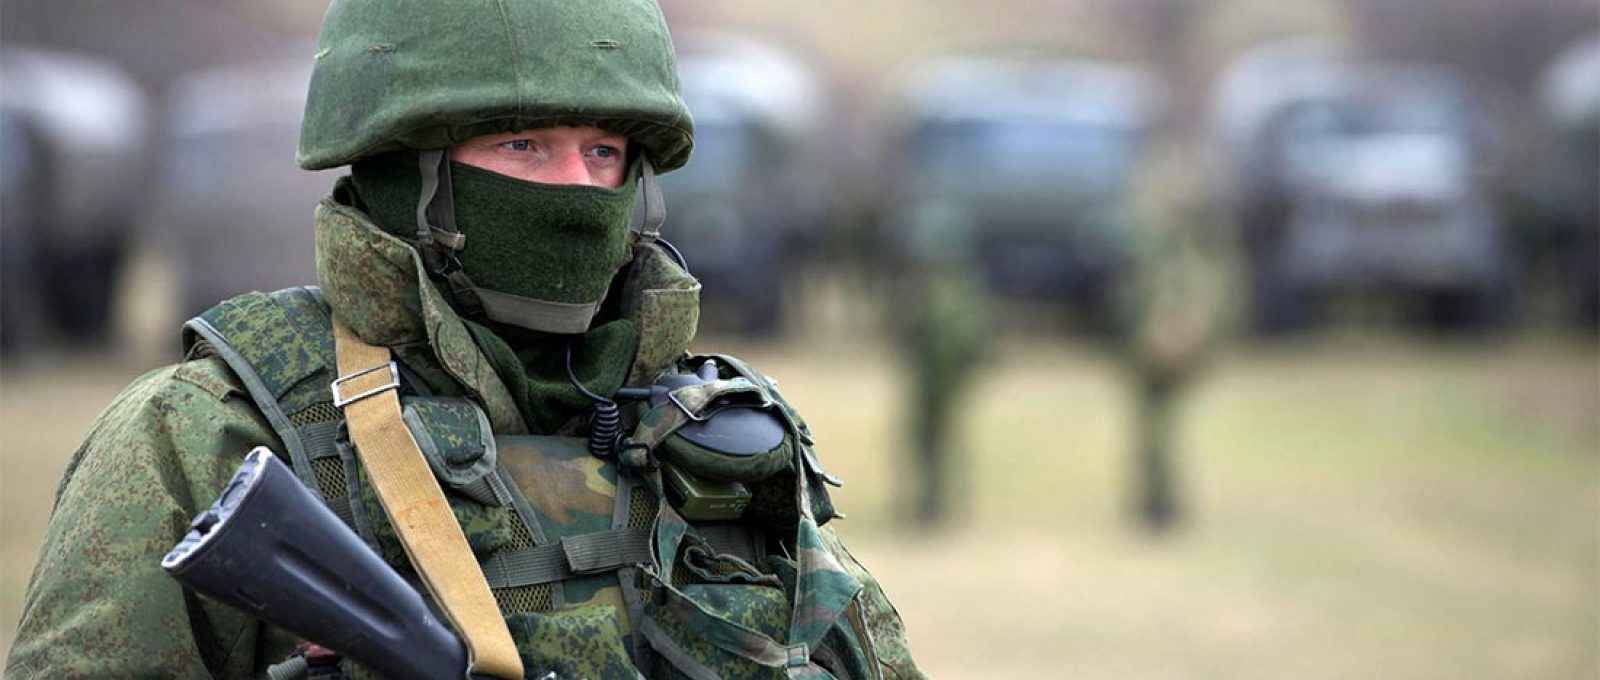 Soldado russo na Crimeia (Foto: Stephen Foote/Alamy).